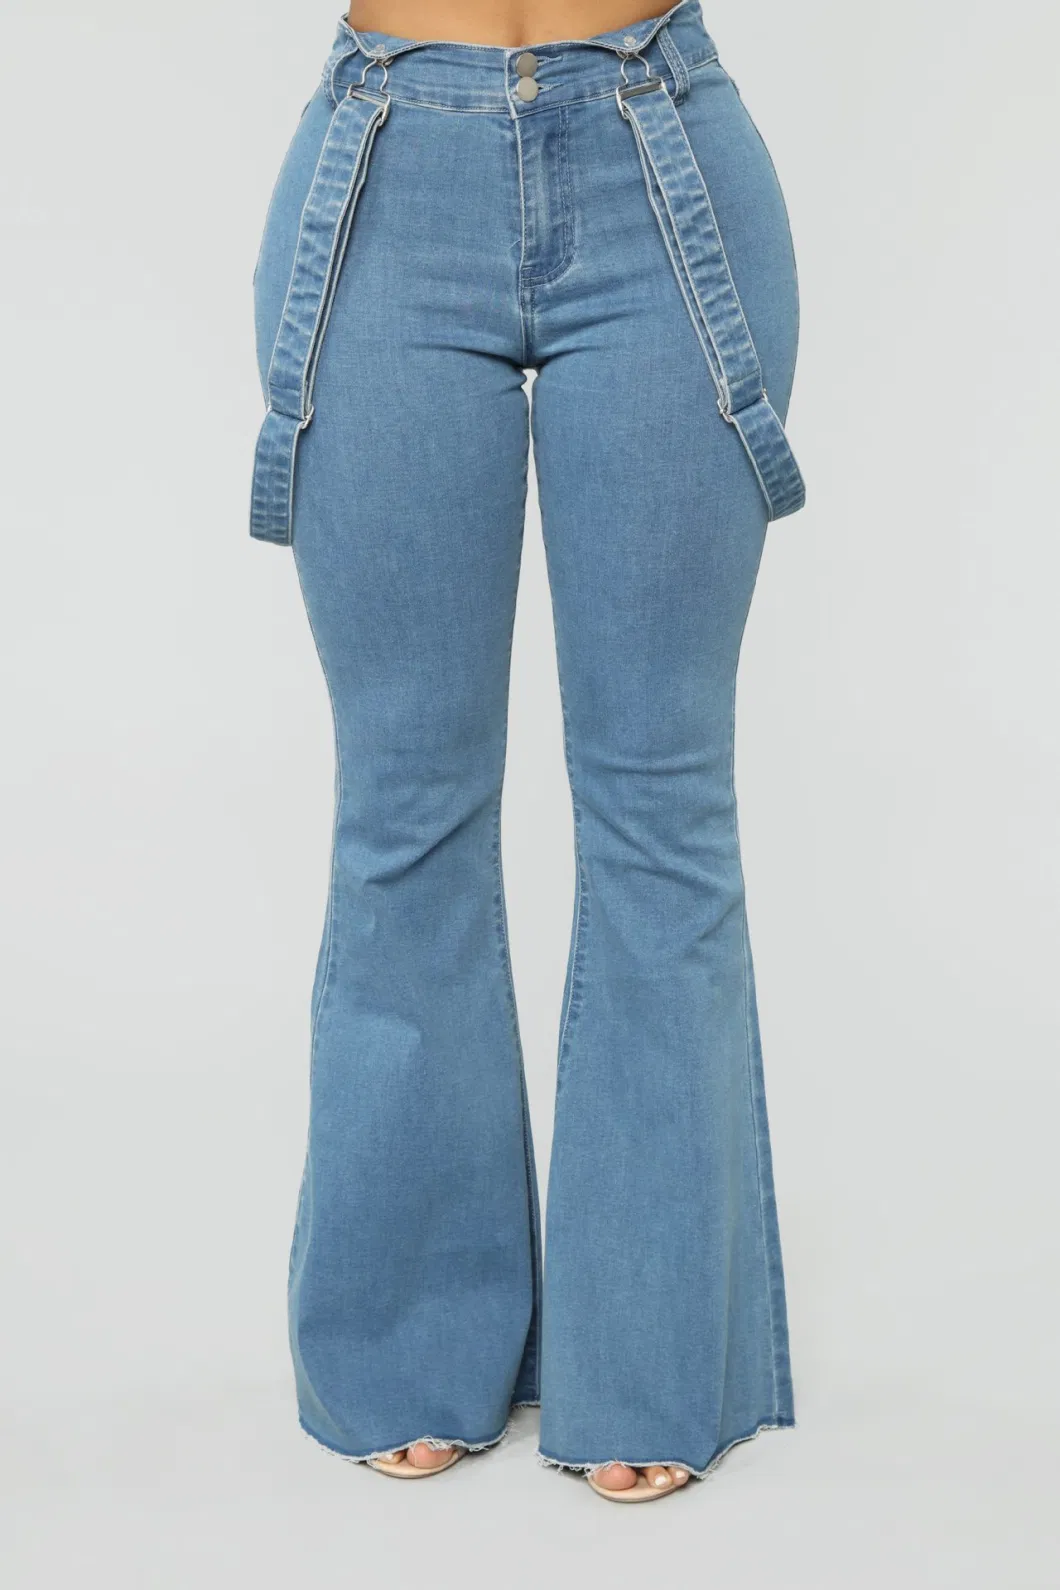 Ladies Stretch Flare Pants Wide Leg Pants Bell-Bottom Denim Jeans